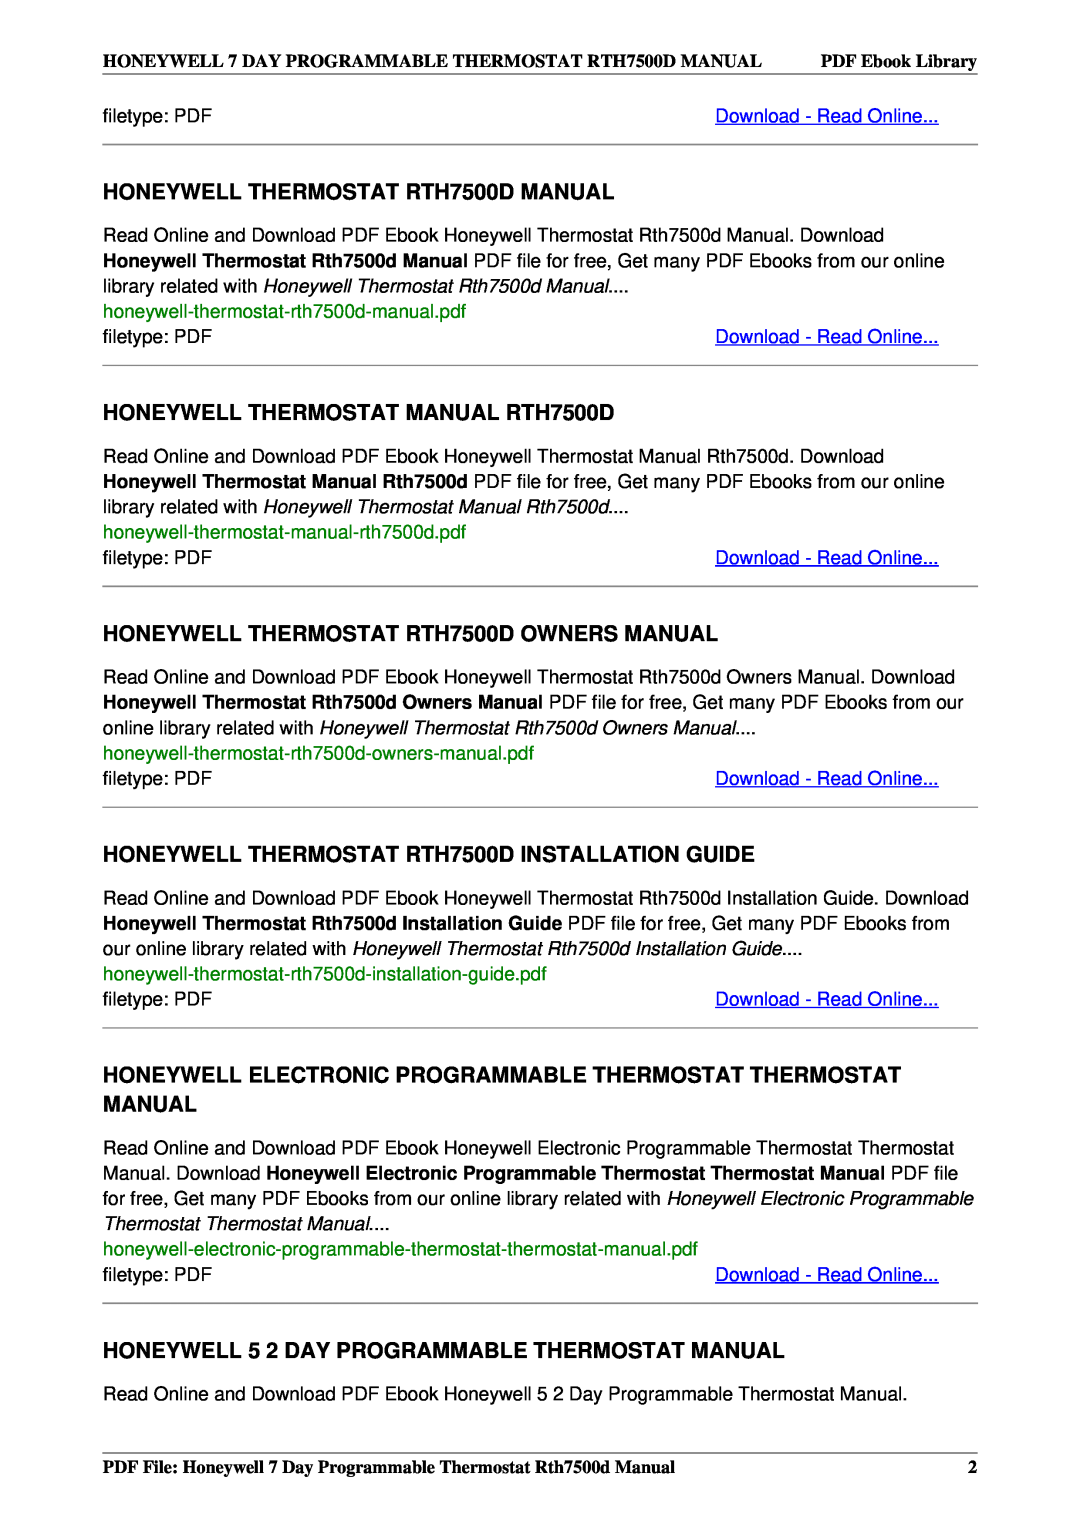 Honeywell manual HONEYWELL THERMOSTAT RTH7500D MANUAL, HONEYWELL THERMOSTAT MANUAL RTH7500D, filetype PDF 